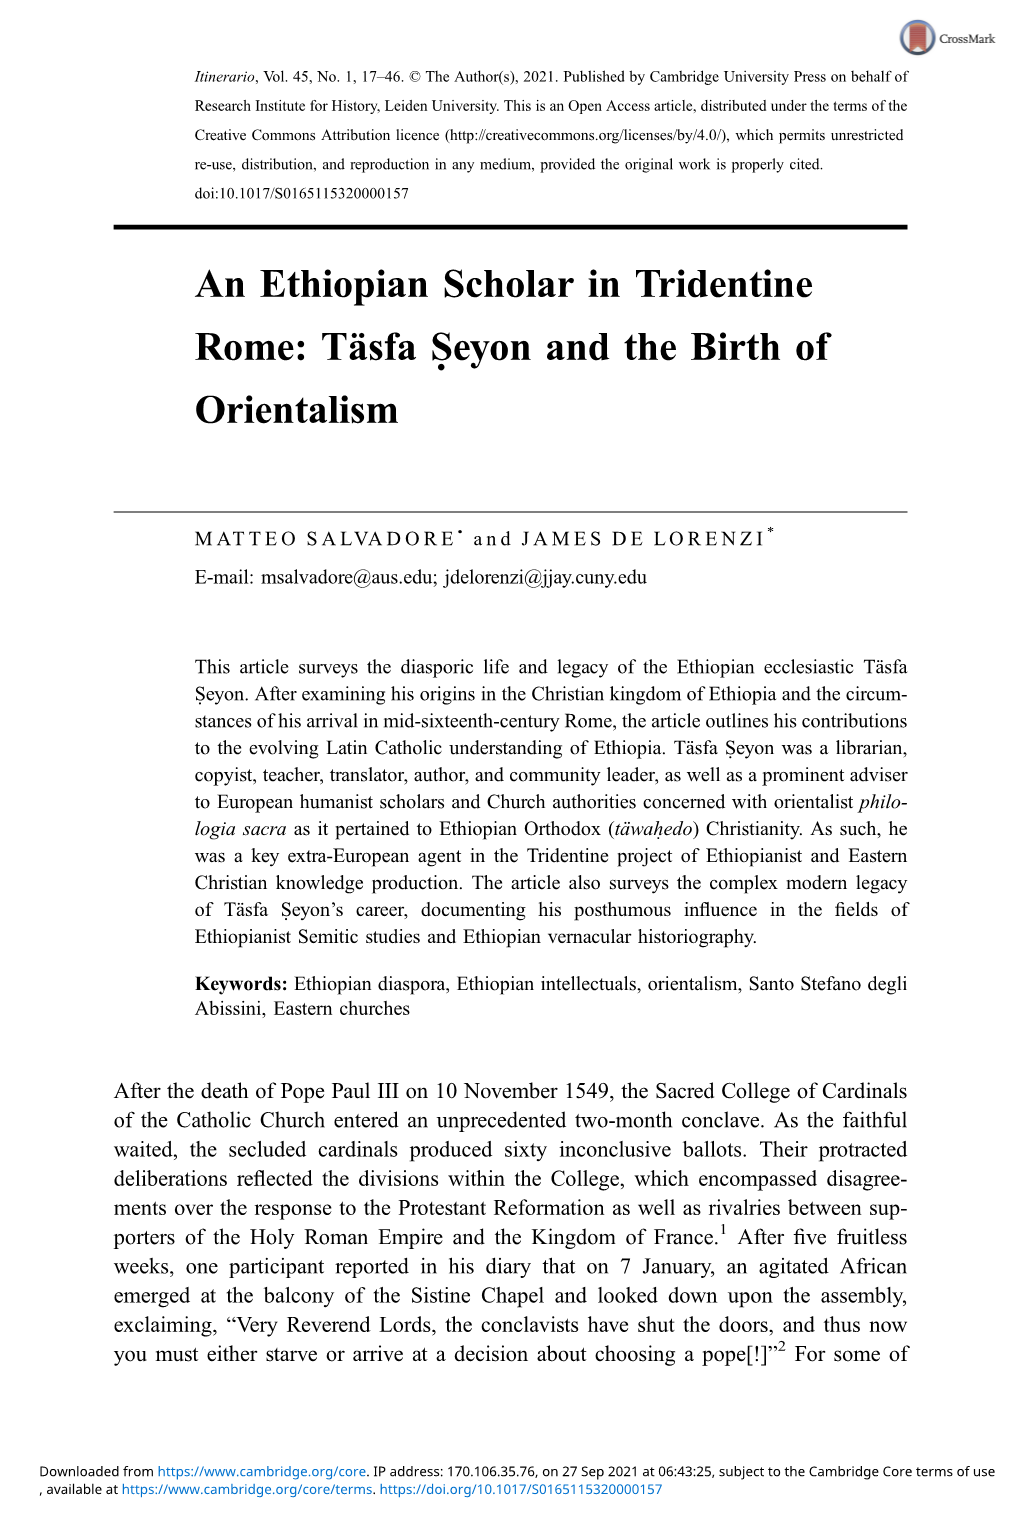 An Ethiopian Scholar in Tridentine Rome: Täsfa Seyoṇ and the Birth of Orientalism